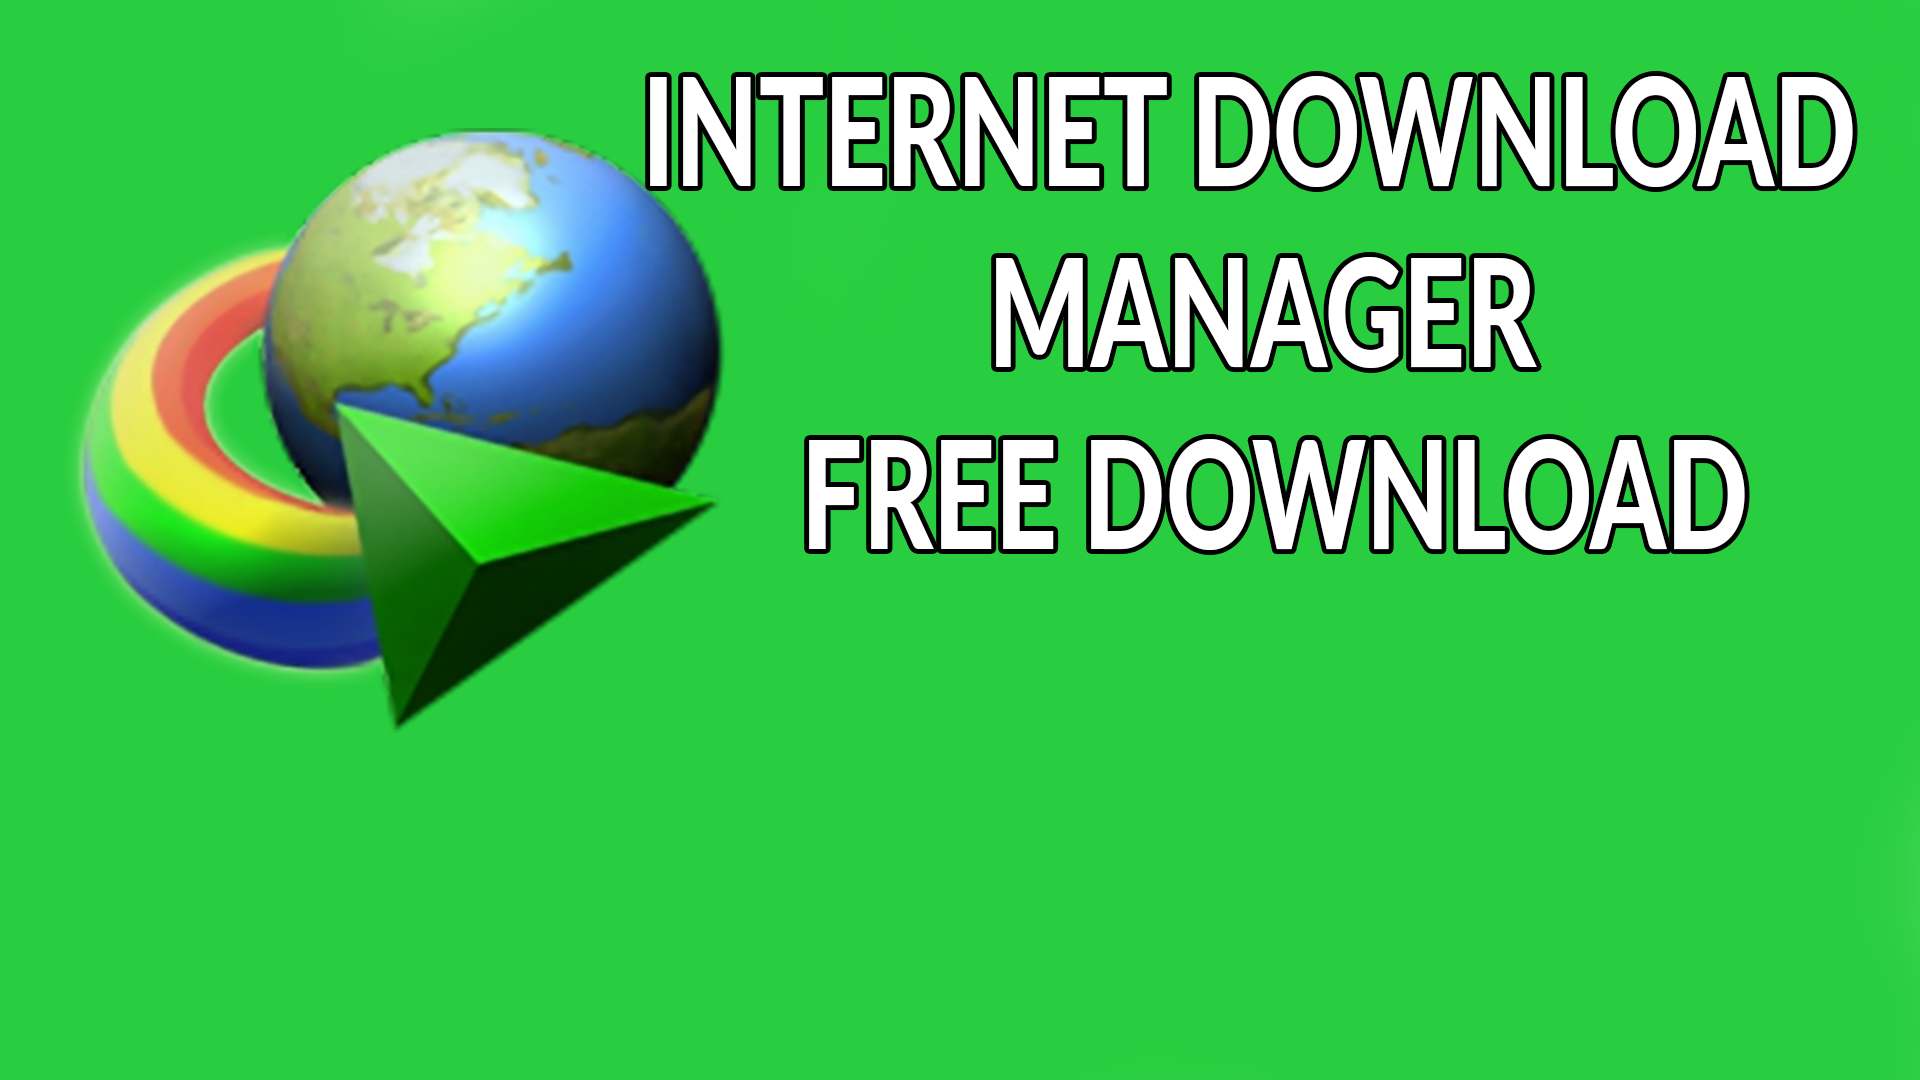 internet download manager free download full version registered free 2013